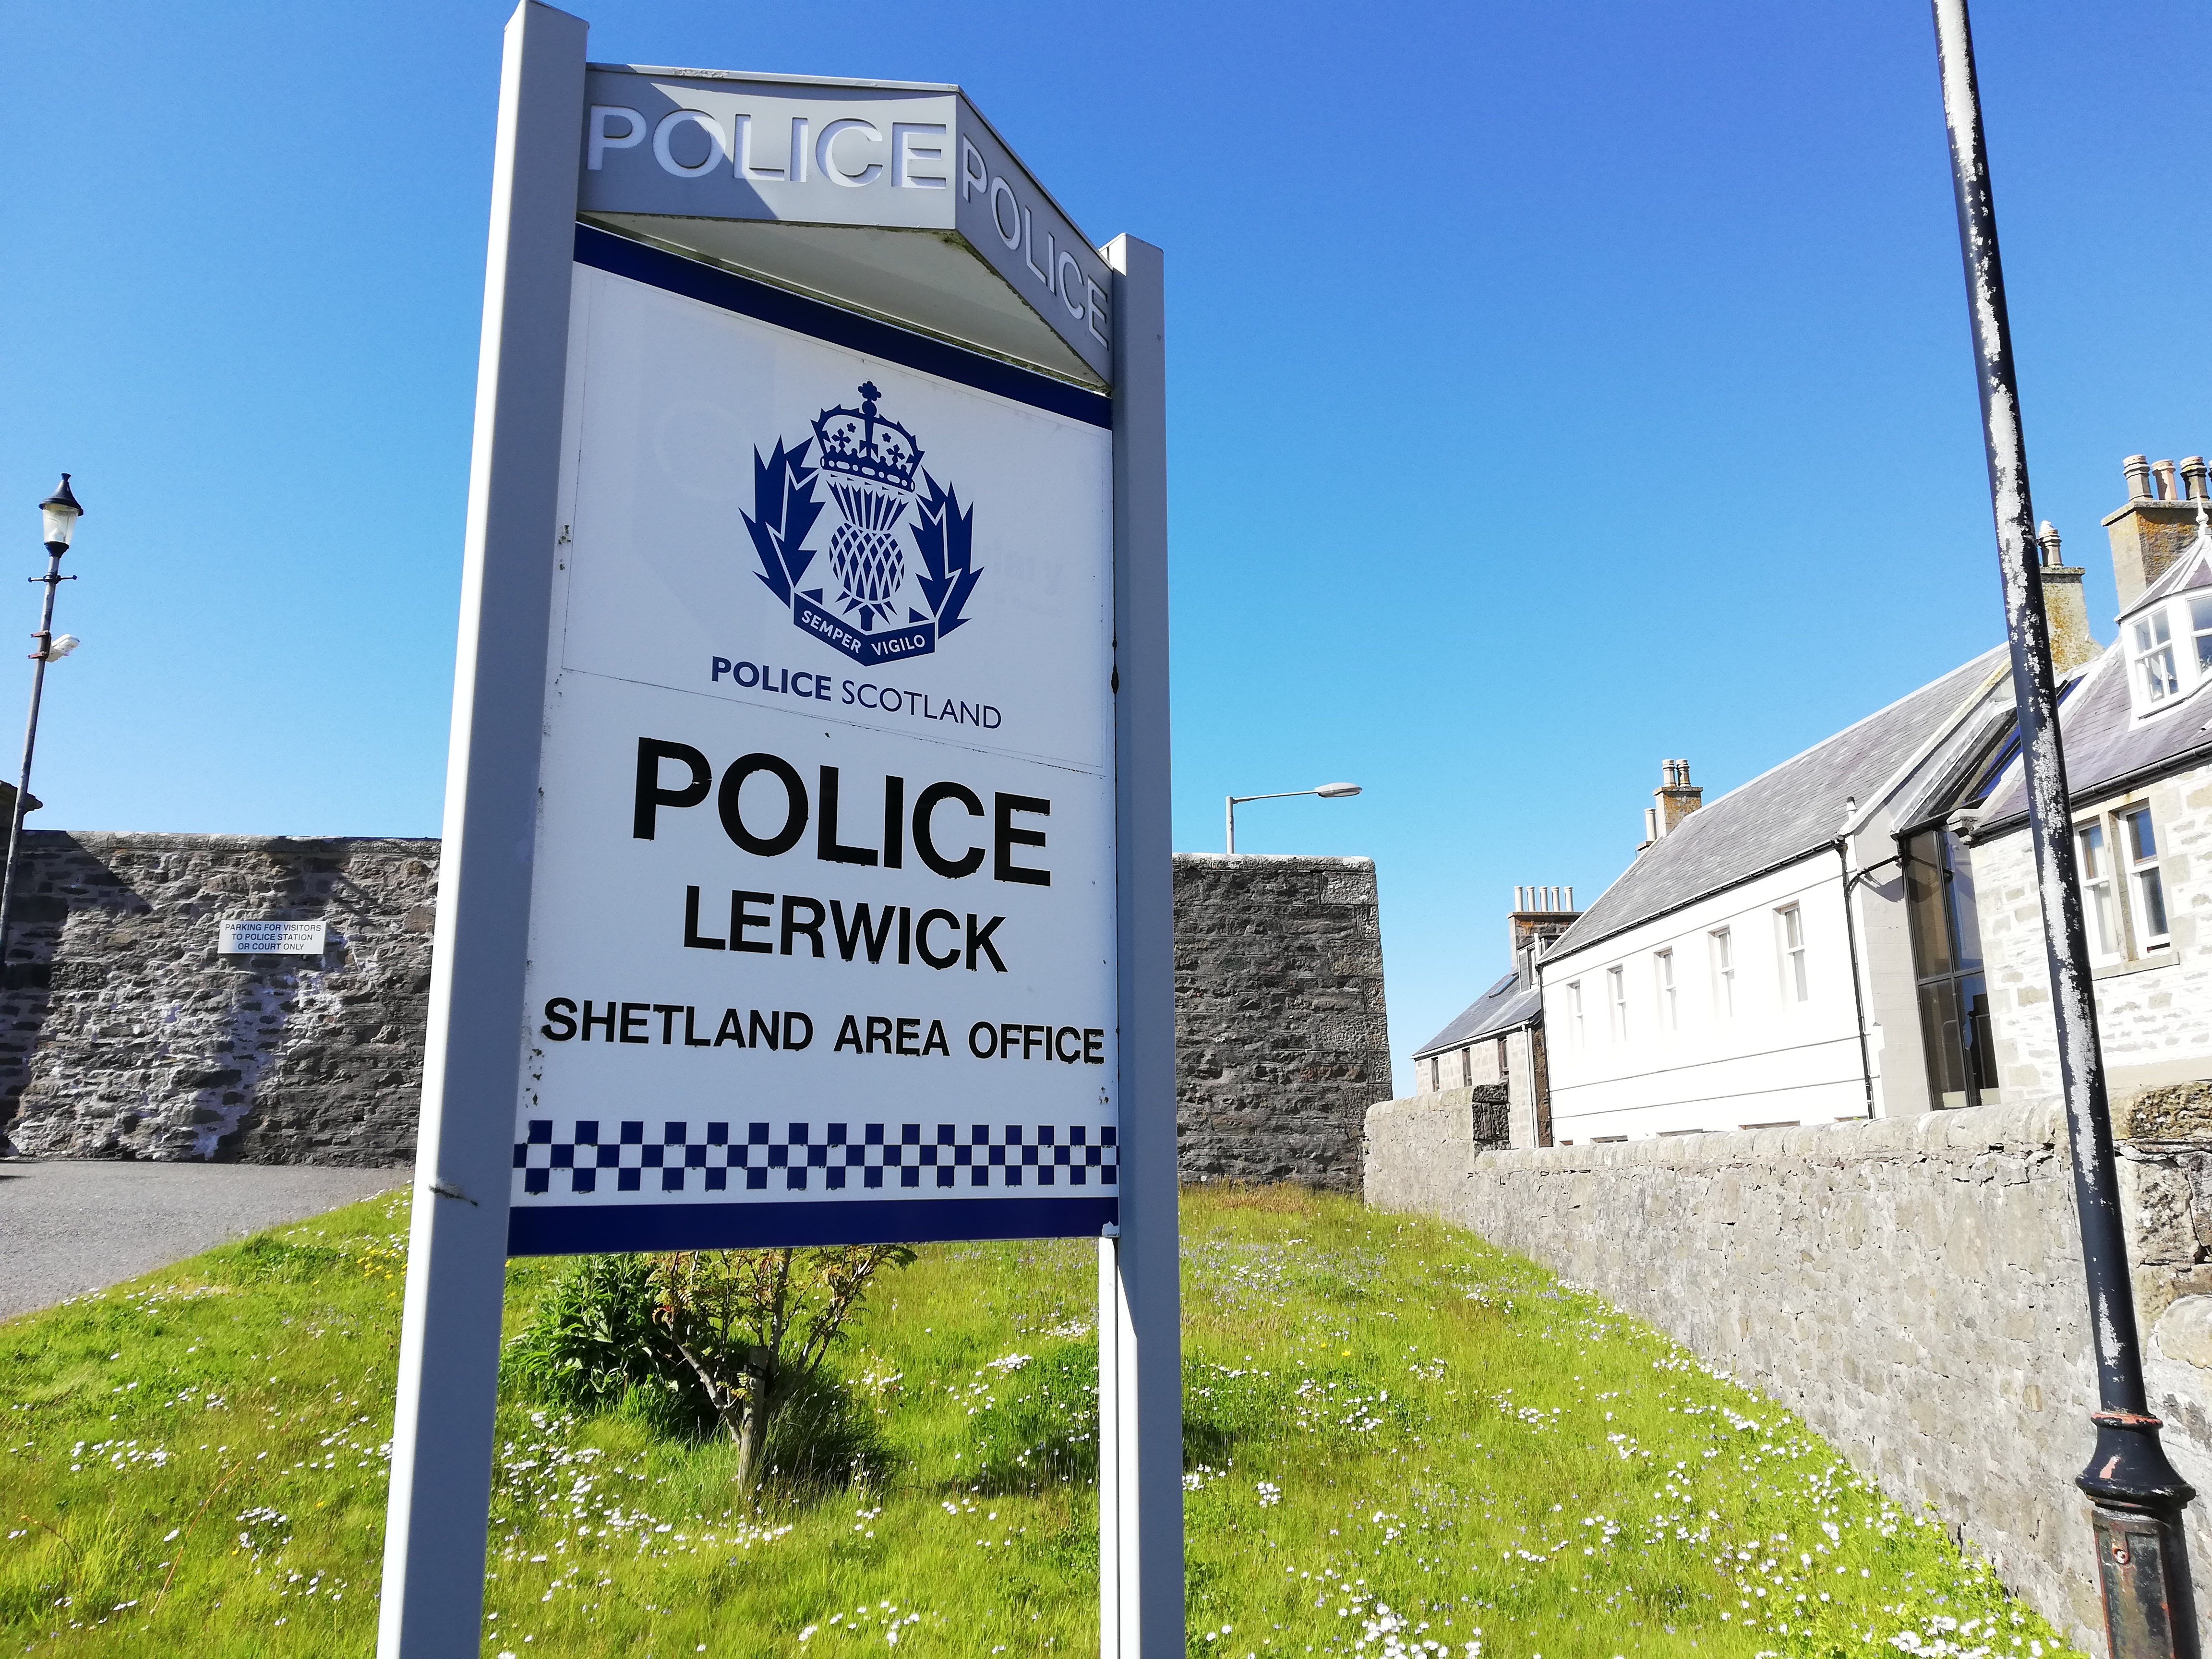 Police keen to recruit more volunteer special constables